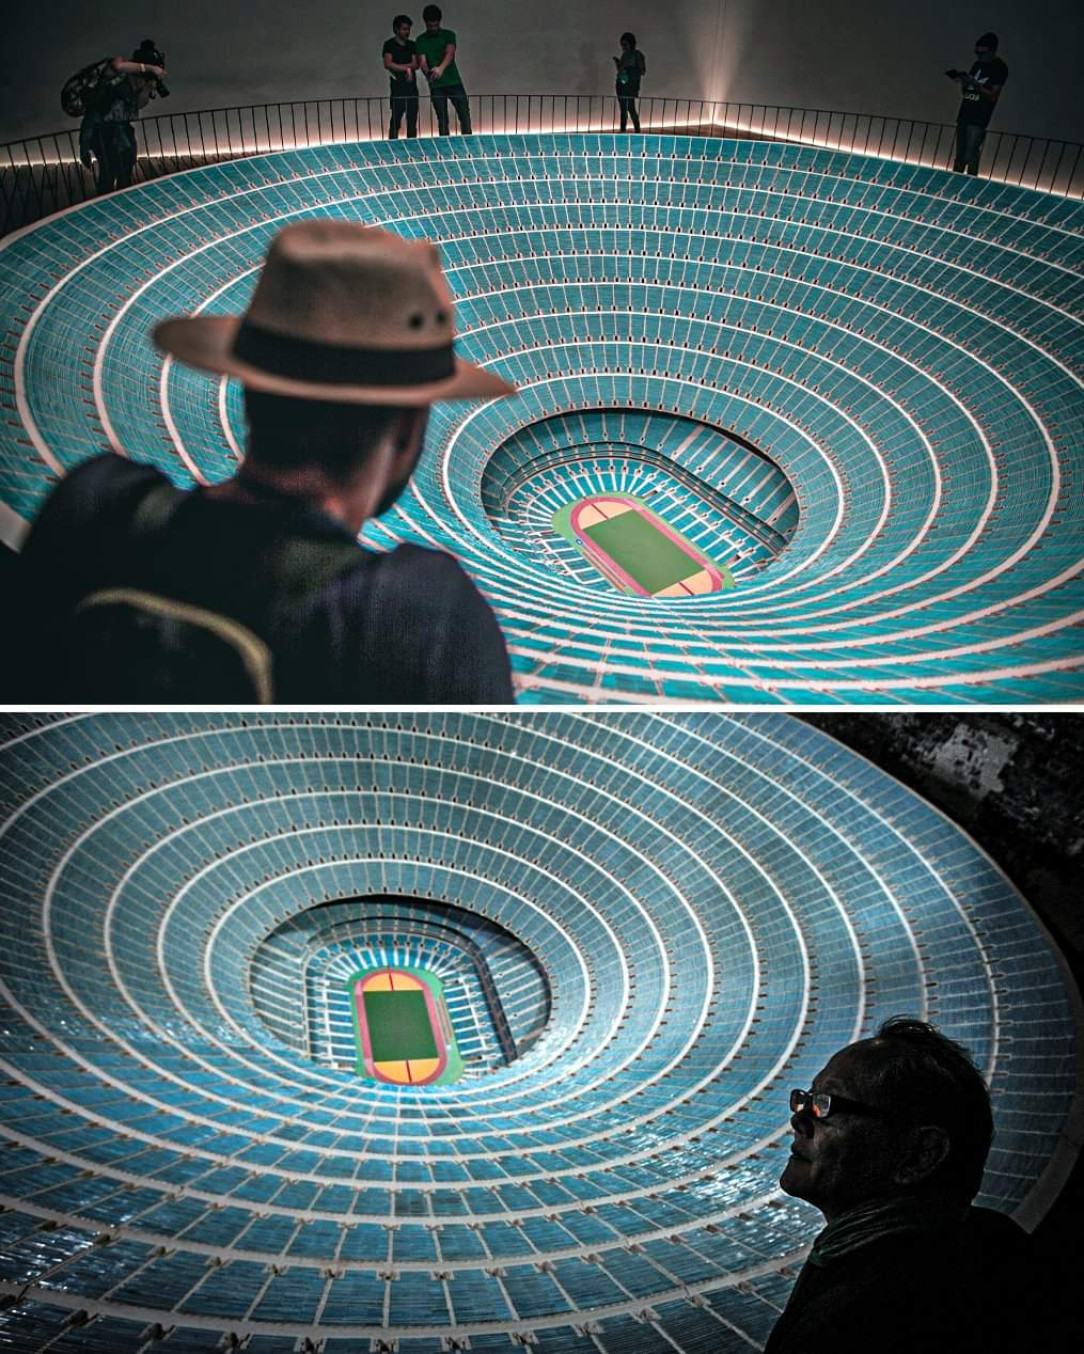 A one million seat stadium concept by American artist Paul Pfeiffer